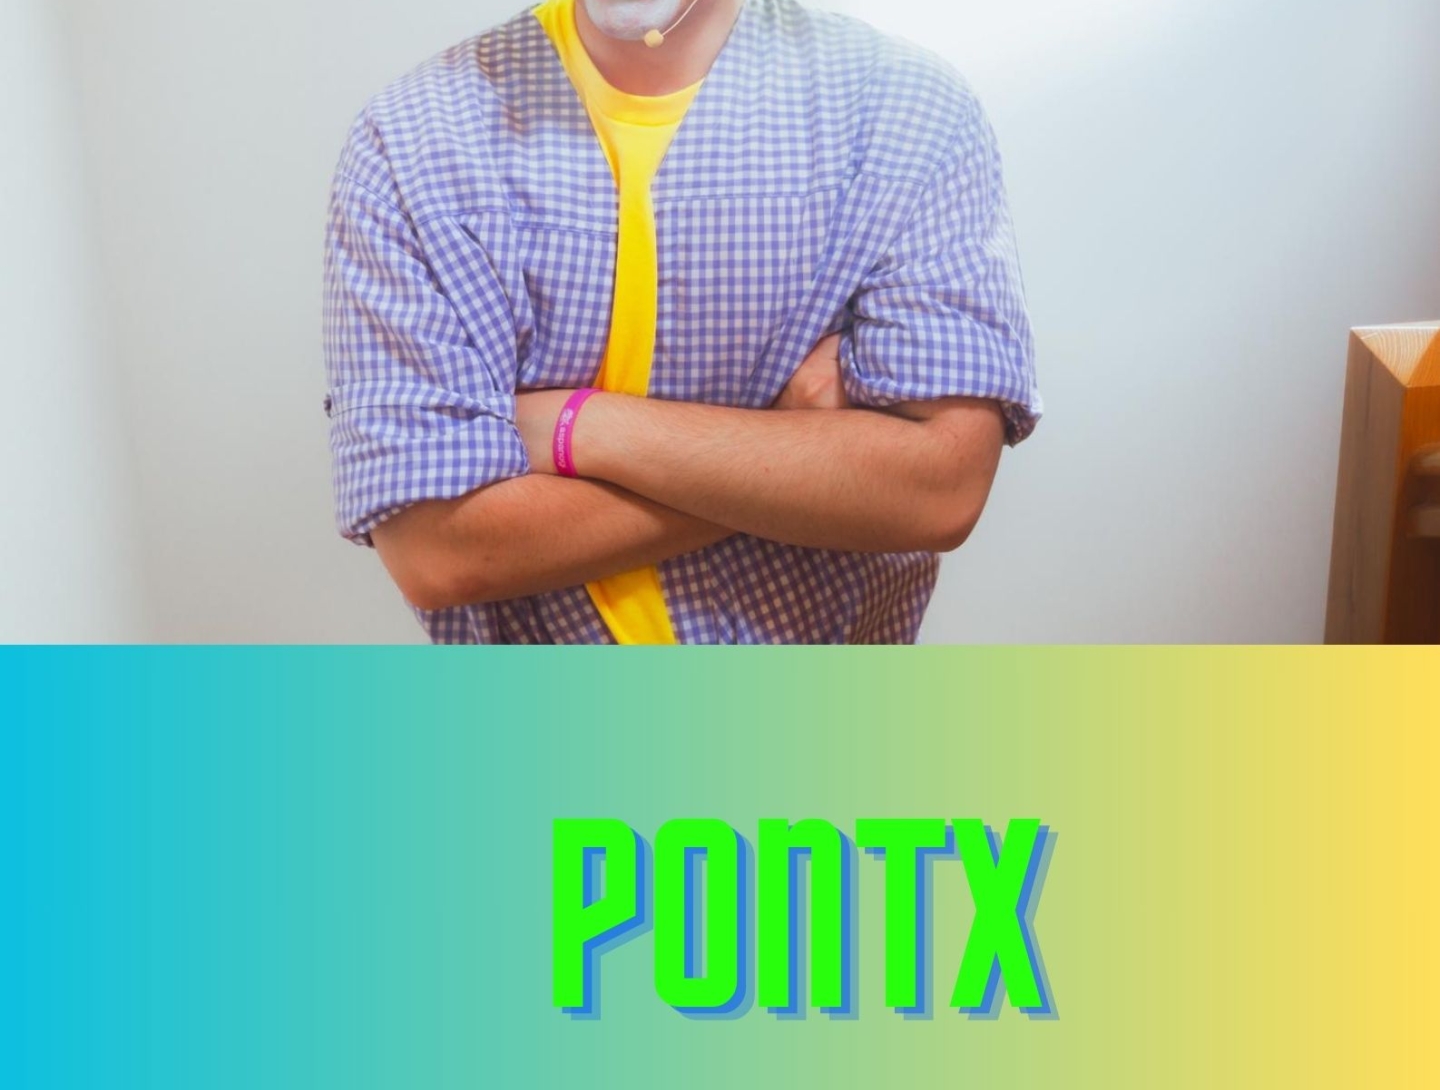 pontx